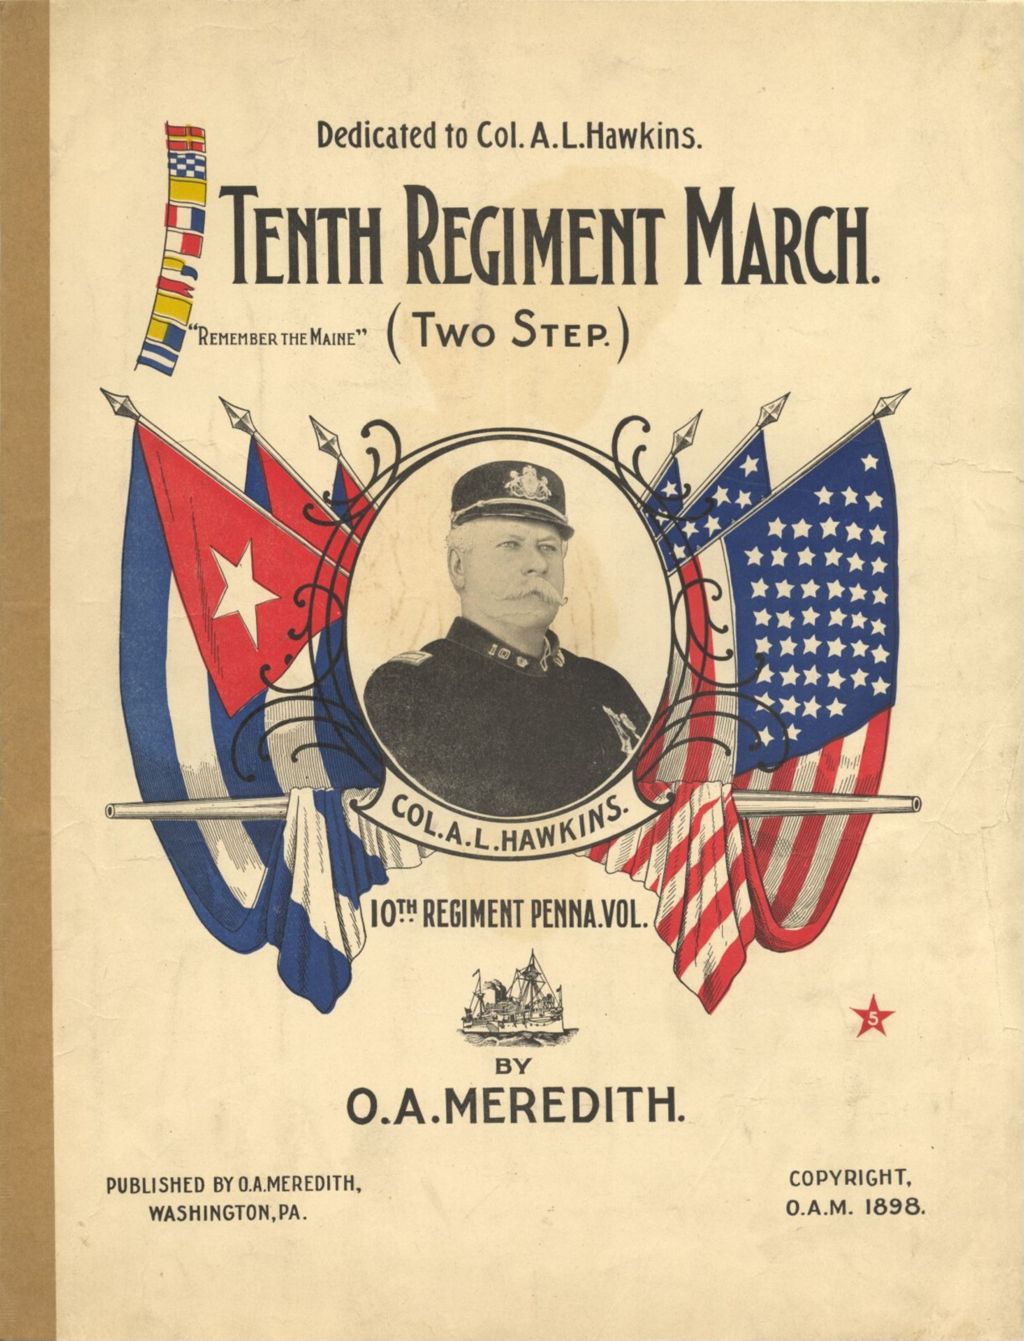 Miniature of Tenth Regiment March